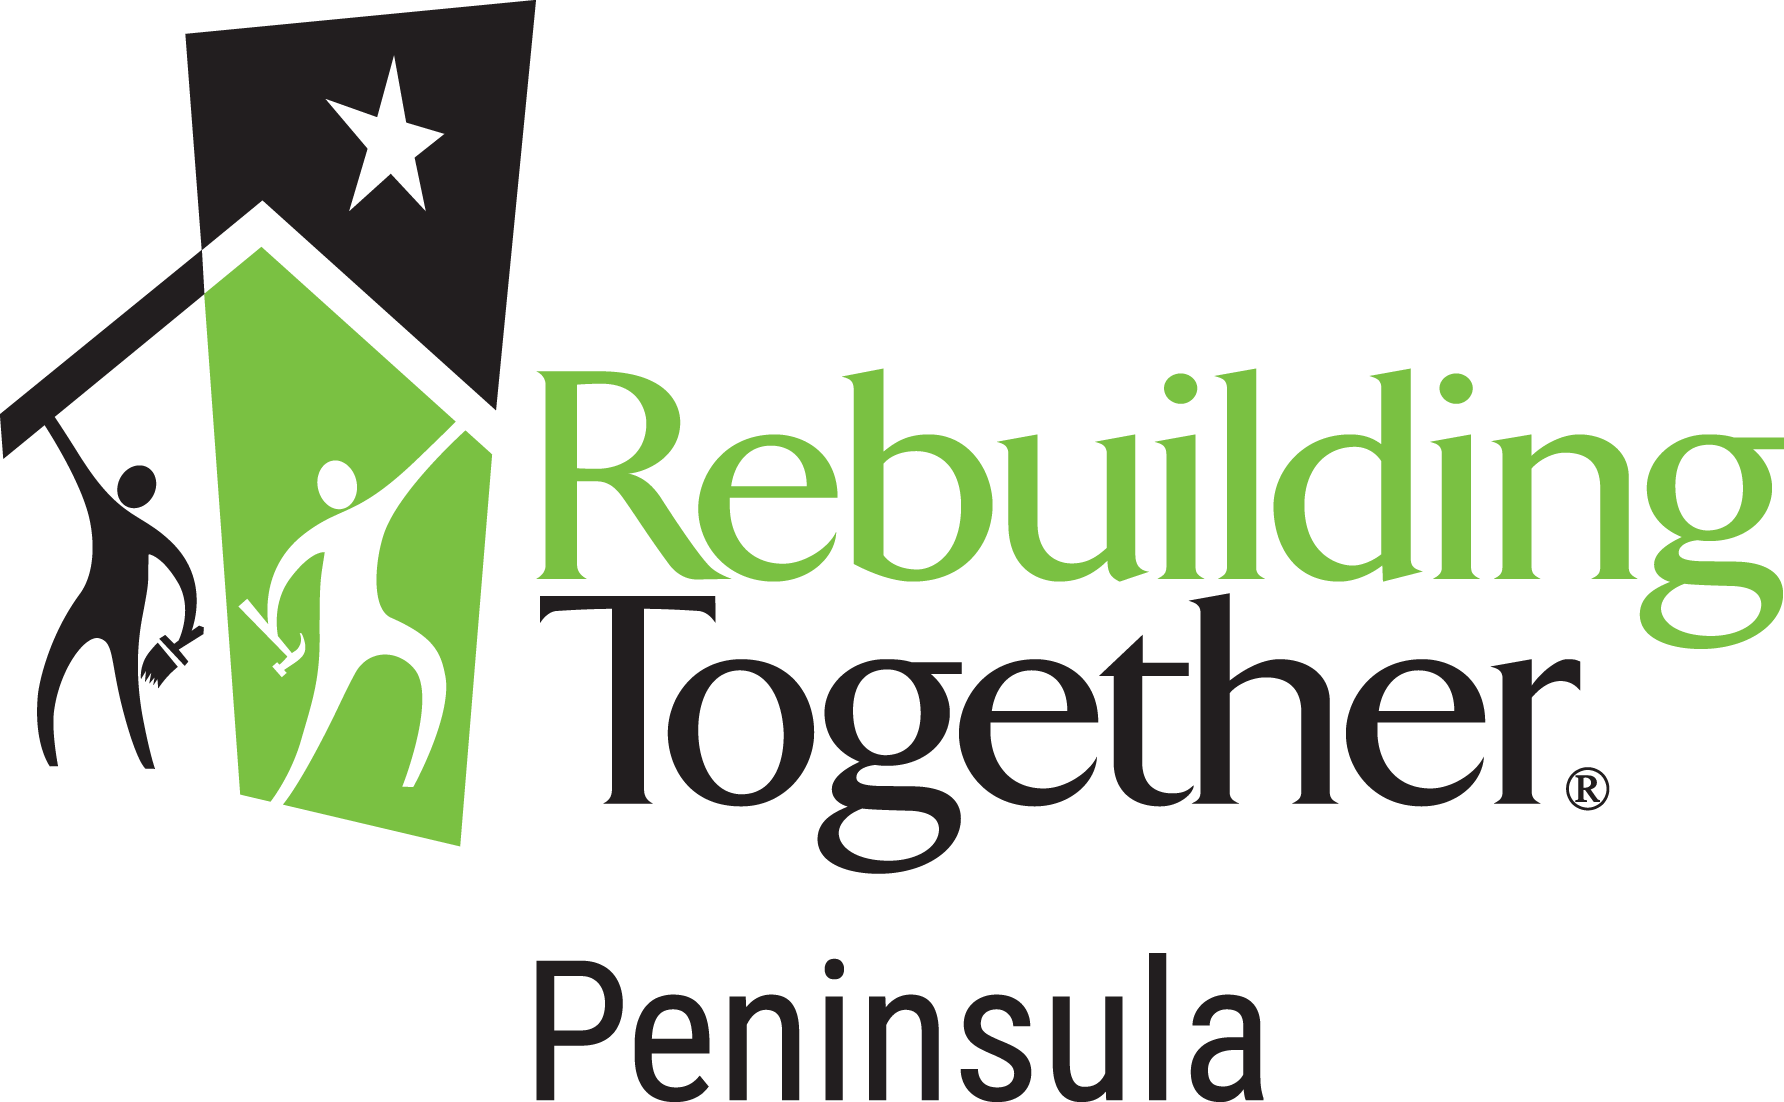 Rebuilding Together Peninsula